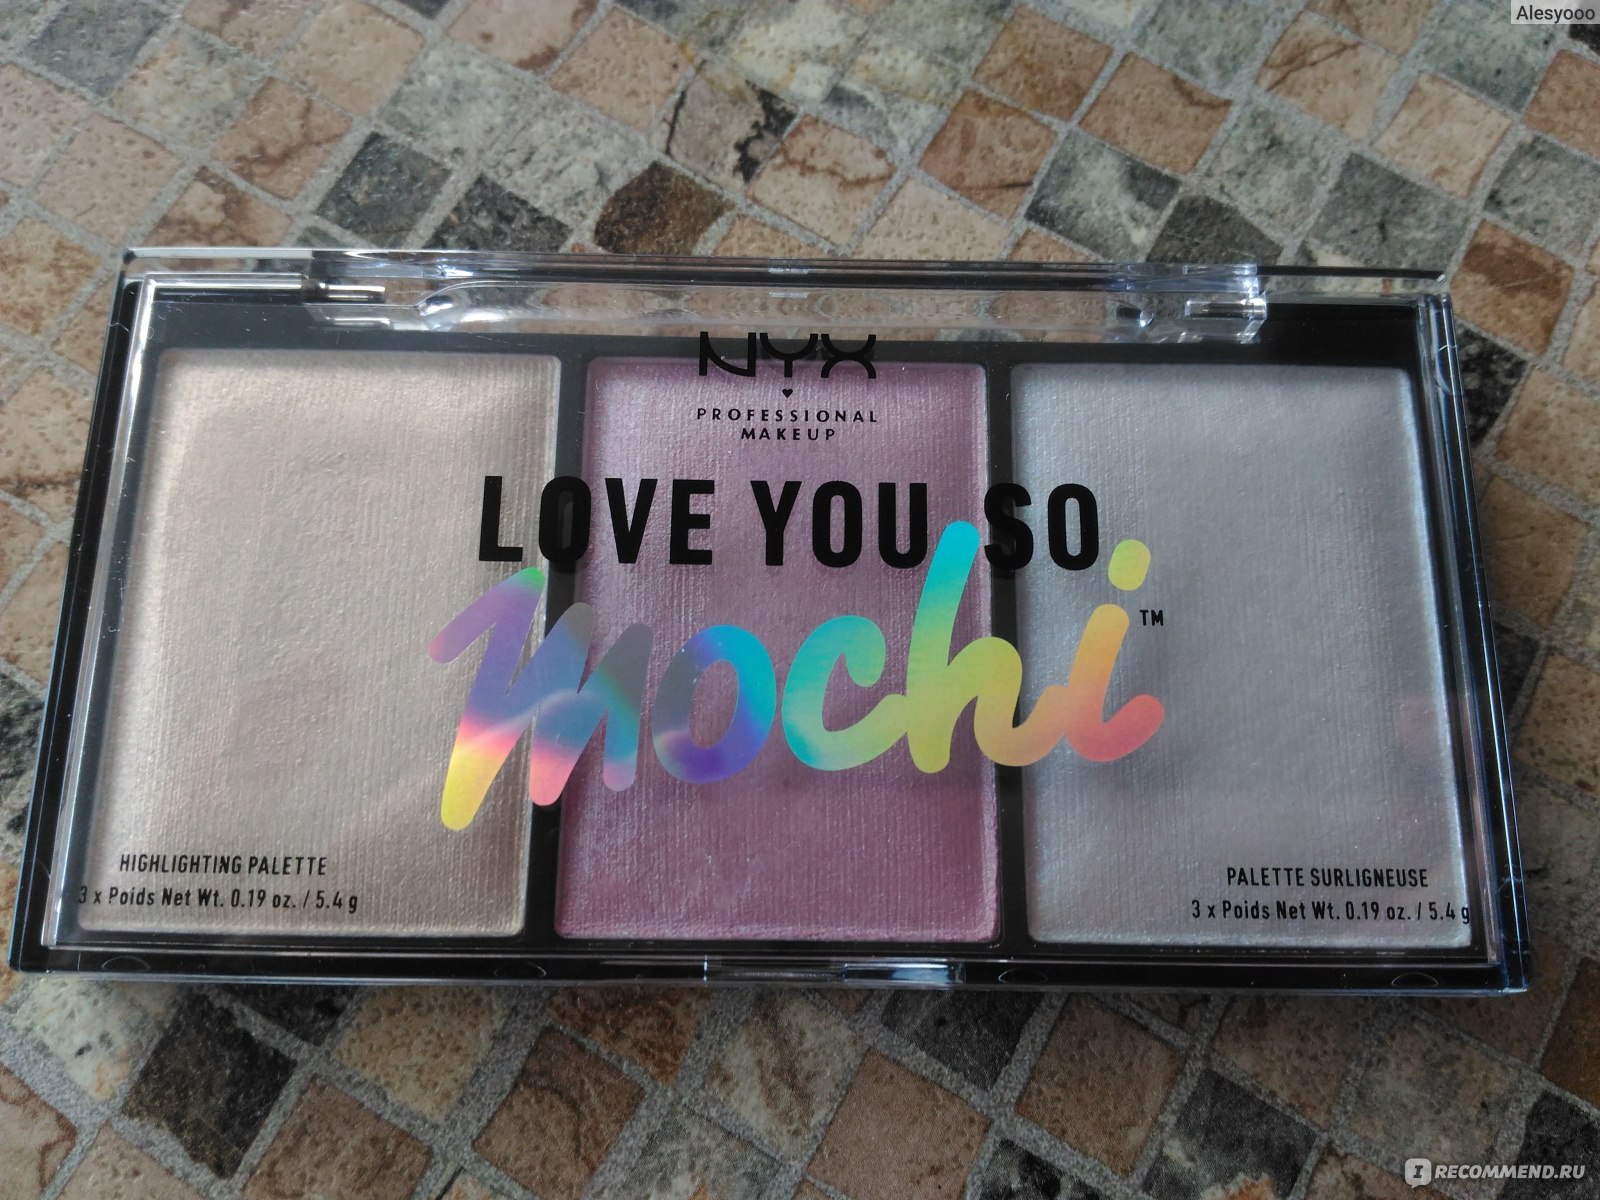 Обзор love you so mochi highlighting palette от nyx